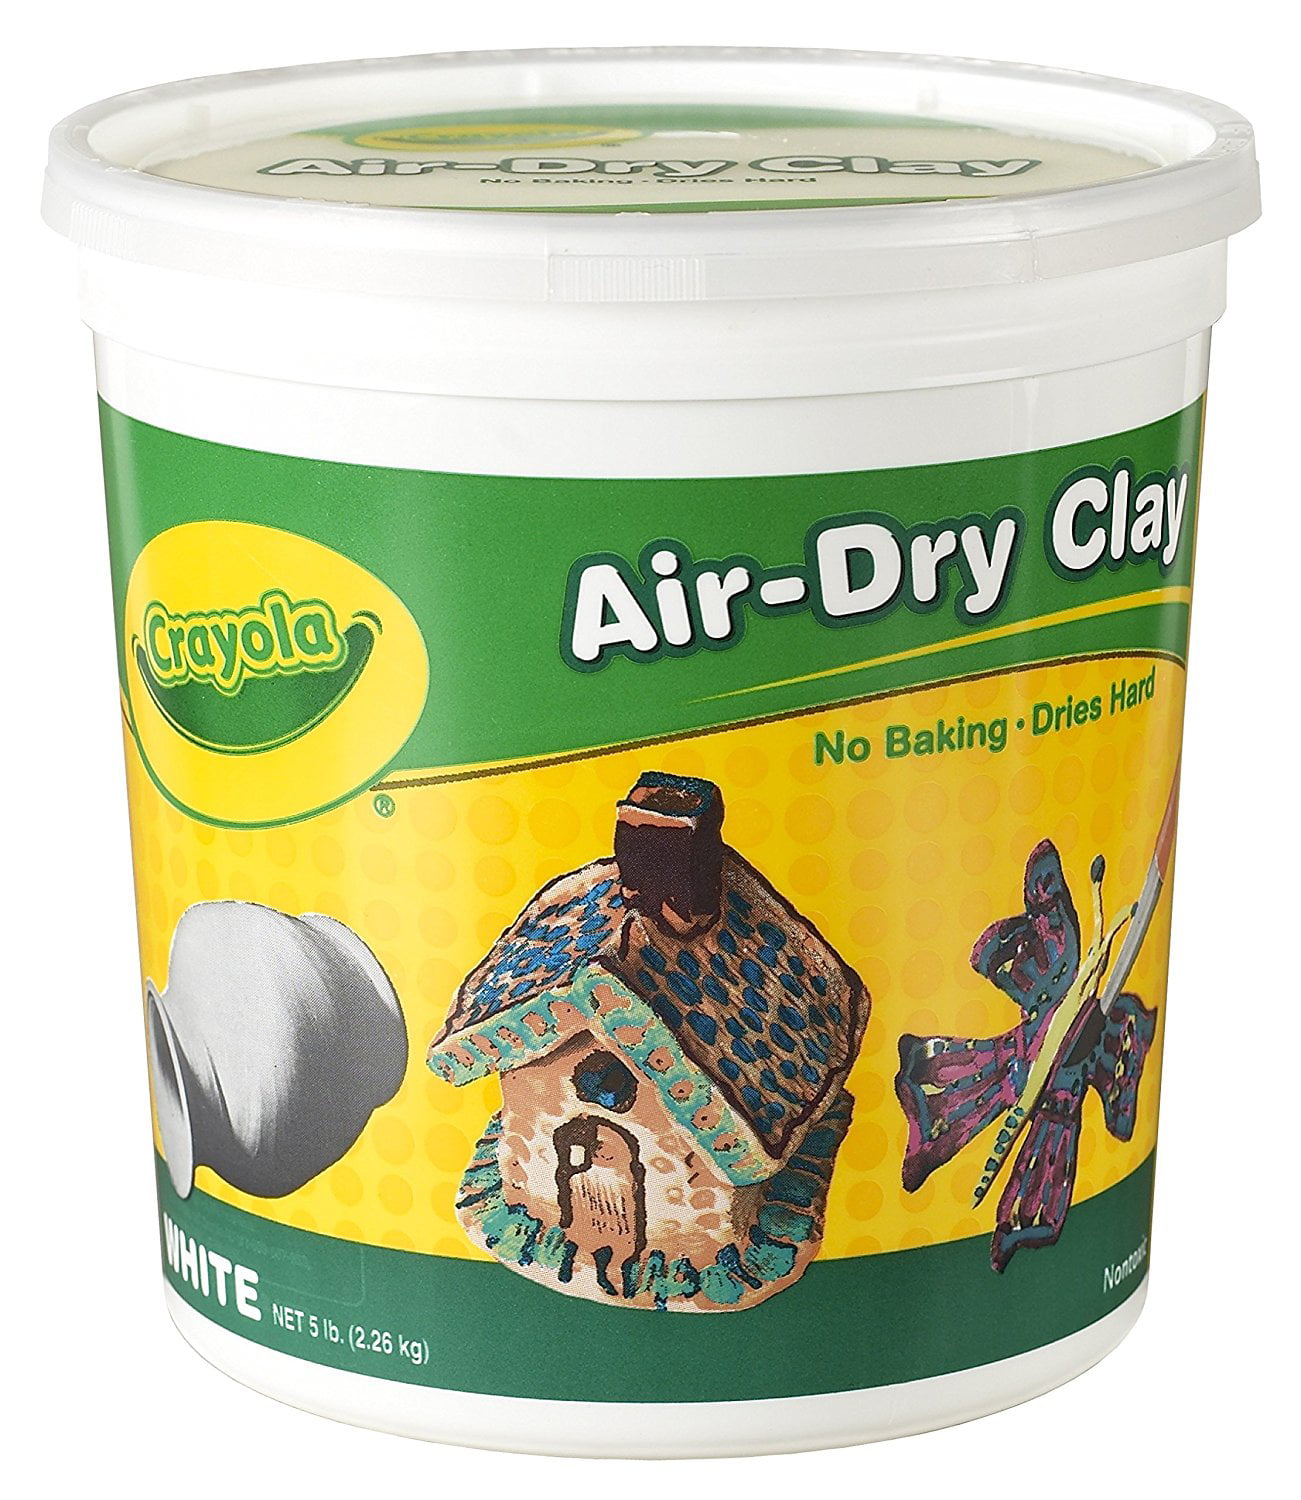 Crayola Air-Dry Clay, White, 5 Lb 